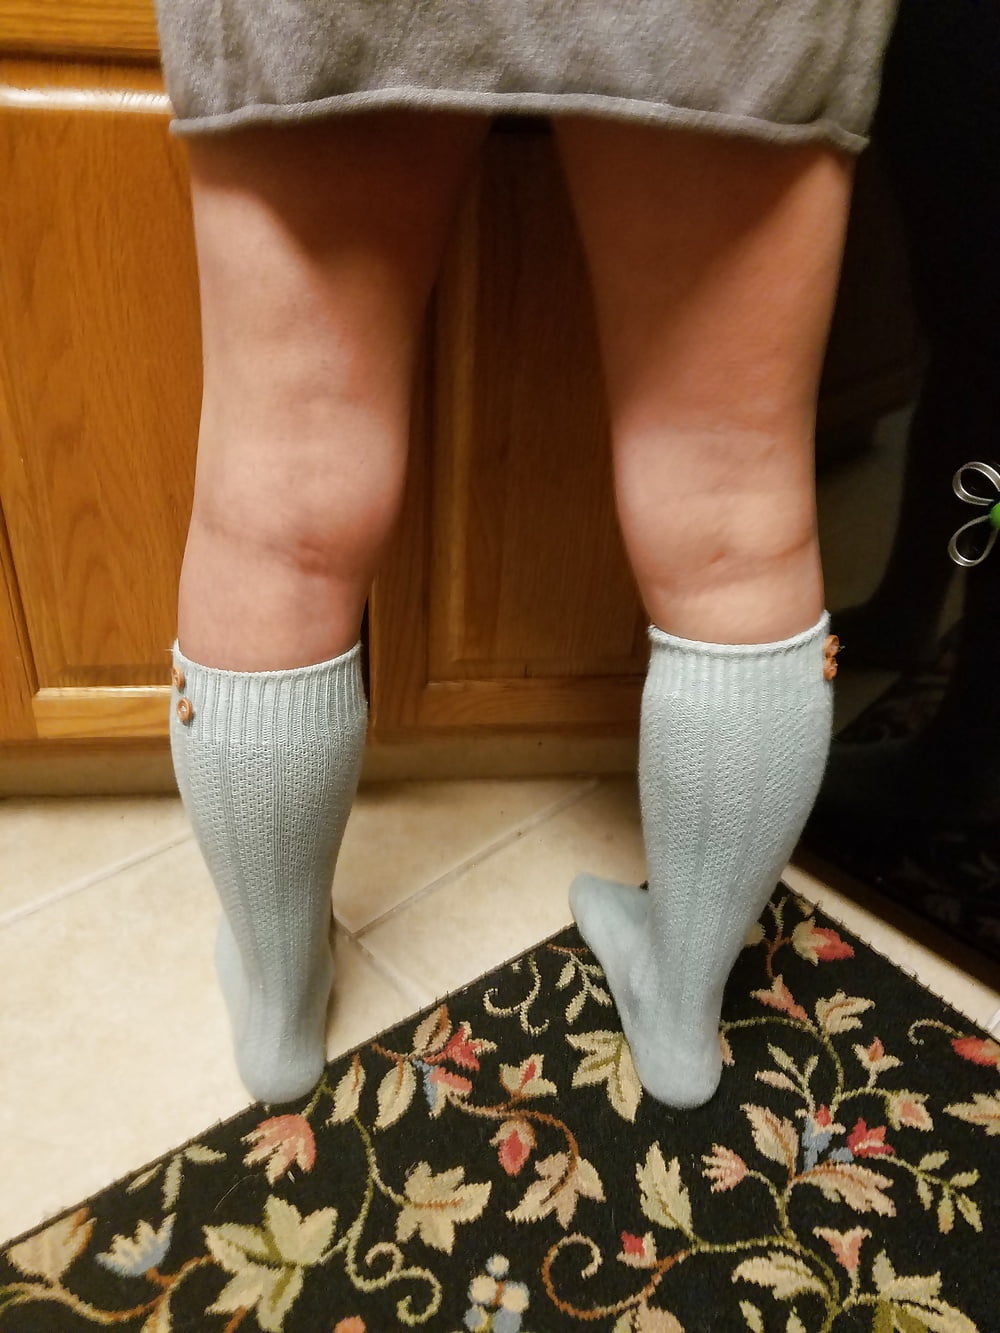 Porn image Wife unaware socks and upskirt